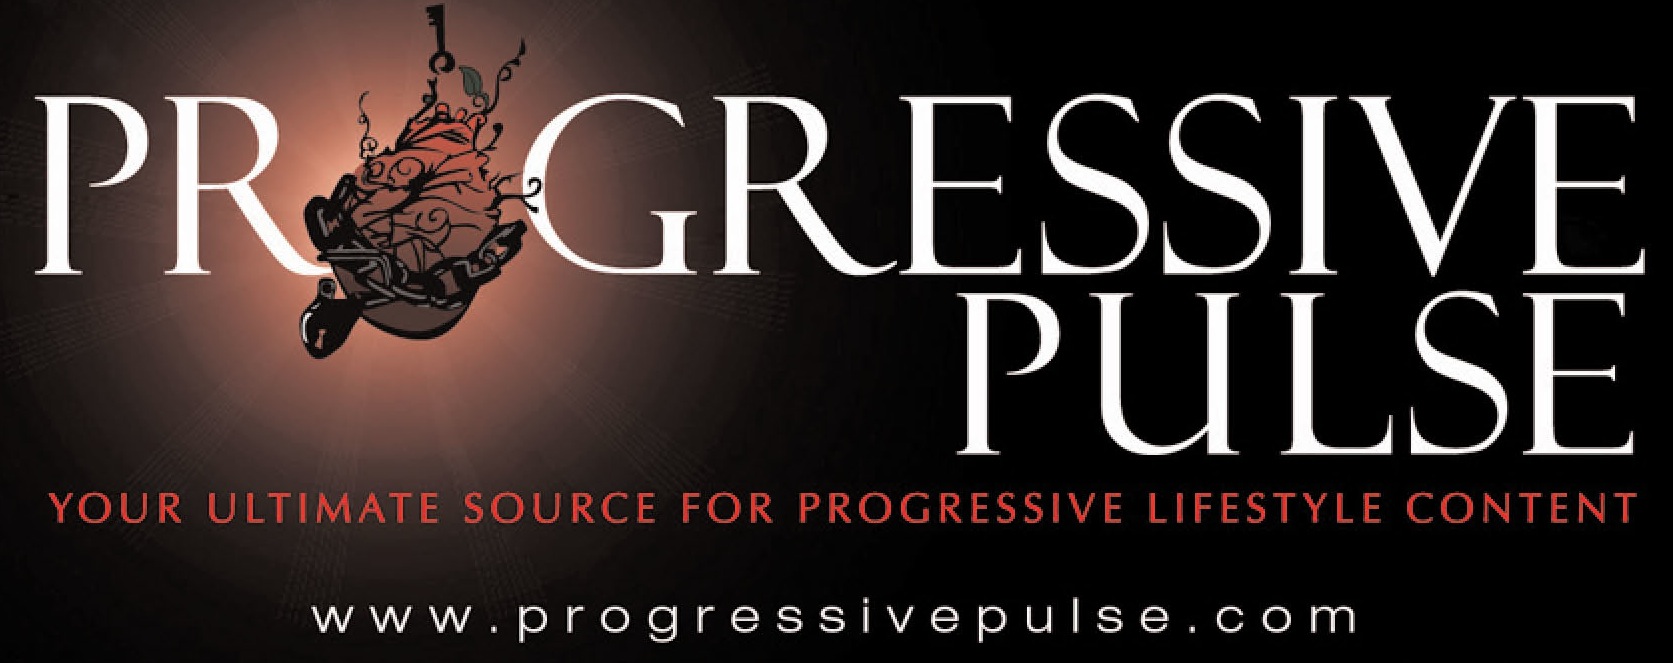 Progressive Pulse online magazine @ProgressivePuls